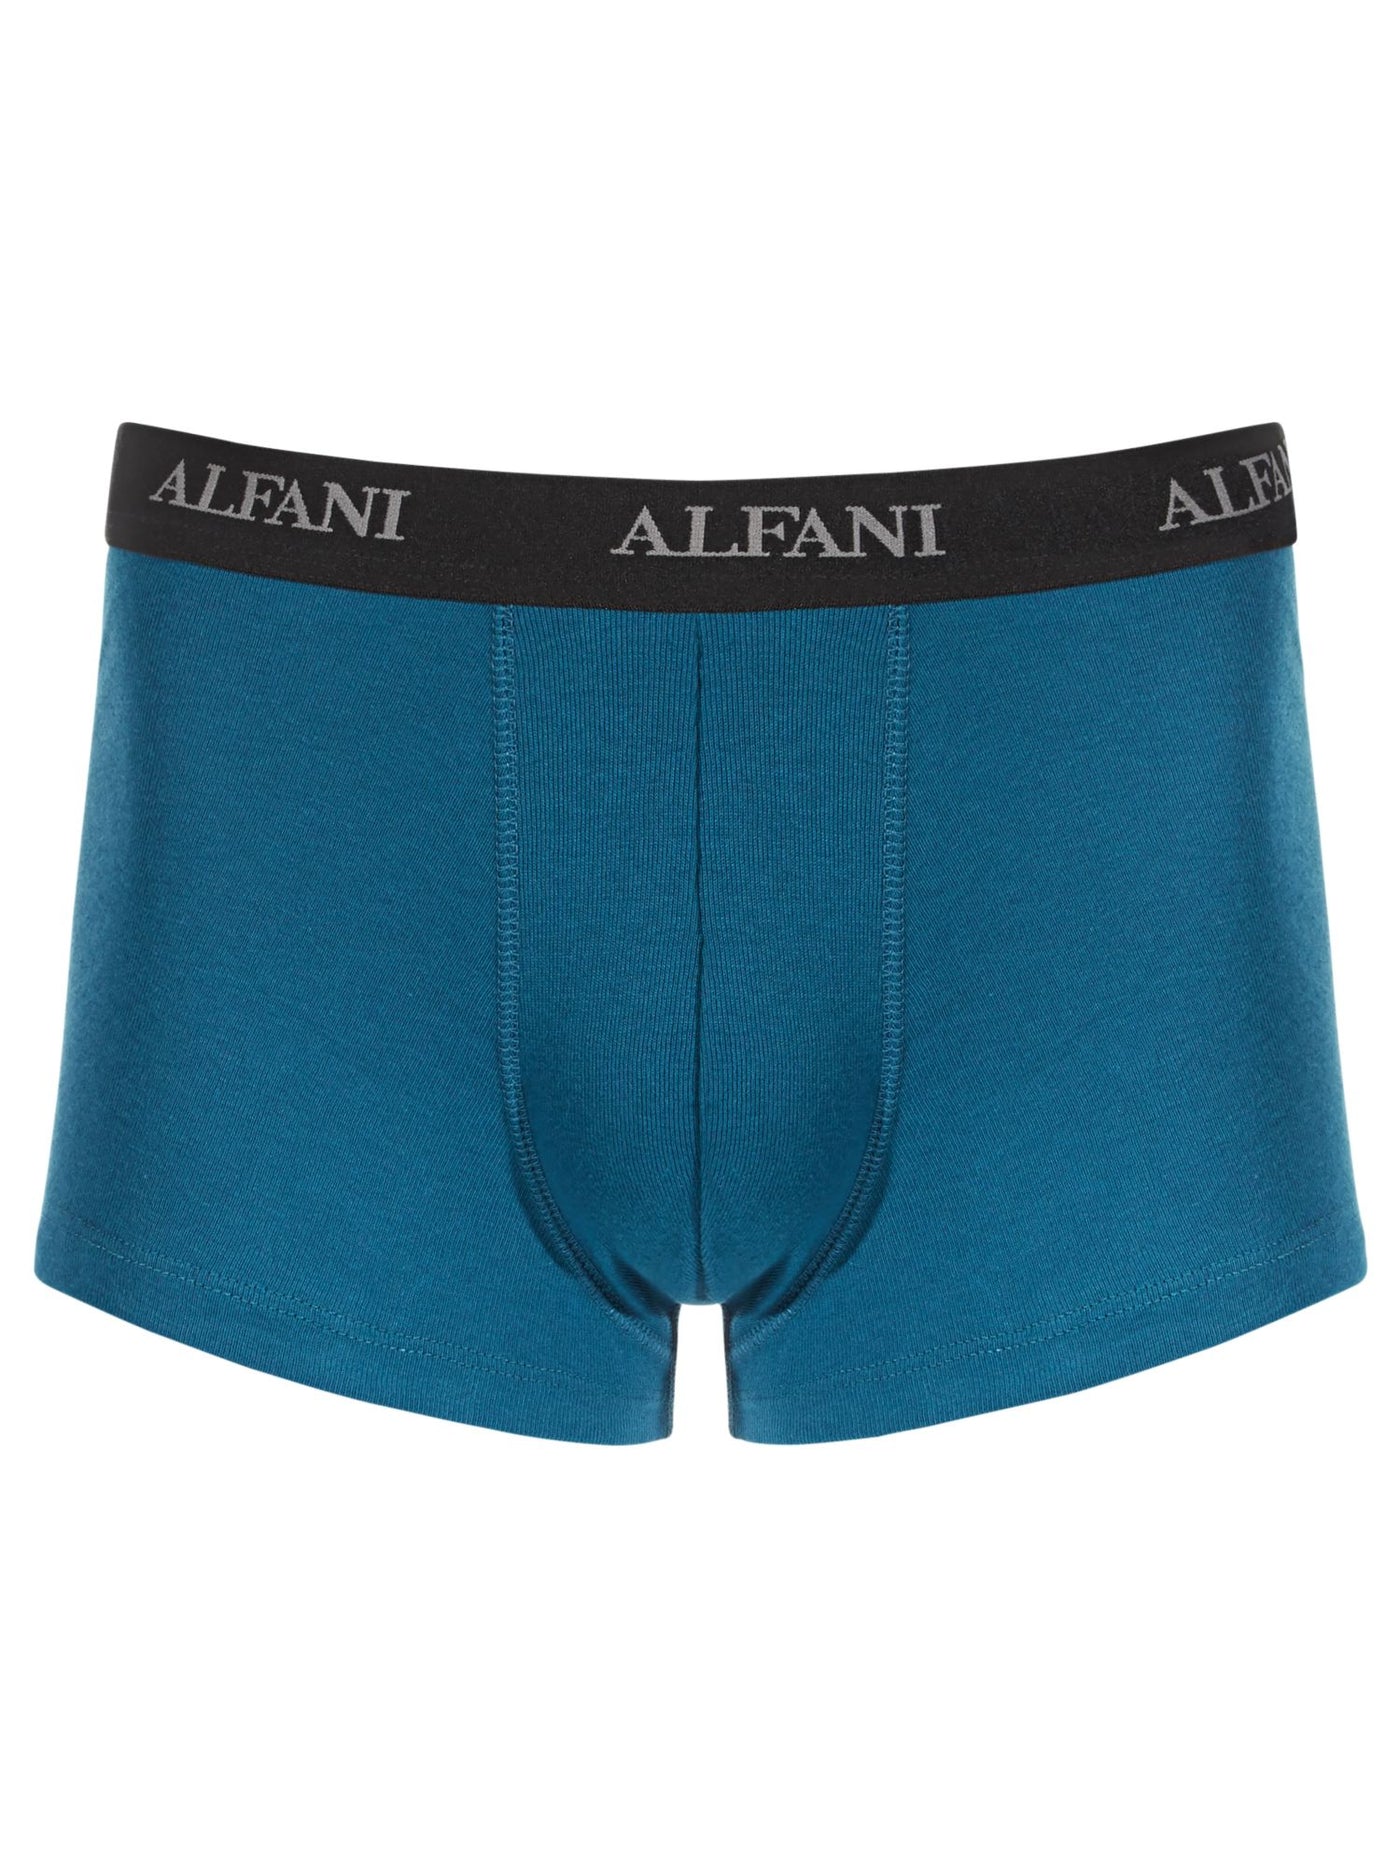 ALFATECH BY ALFANI Intimates Blue Tagless Comfort Fit Trunk Underwear M